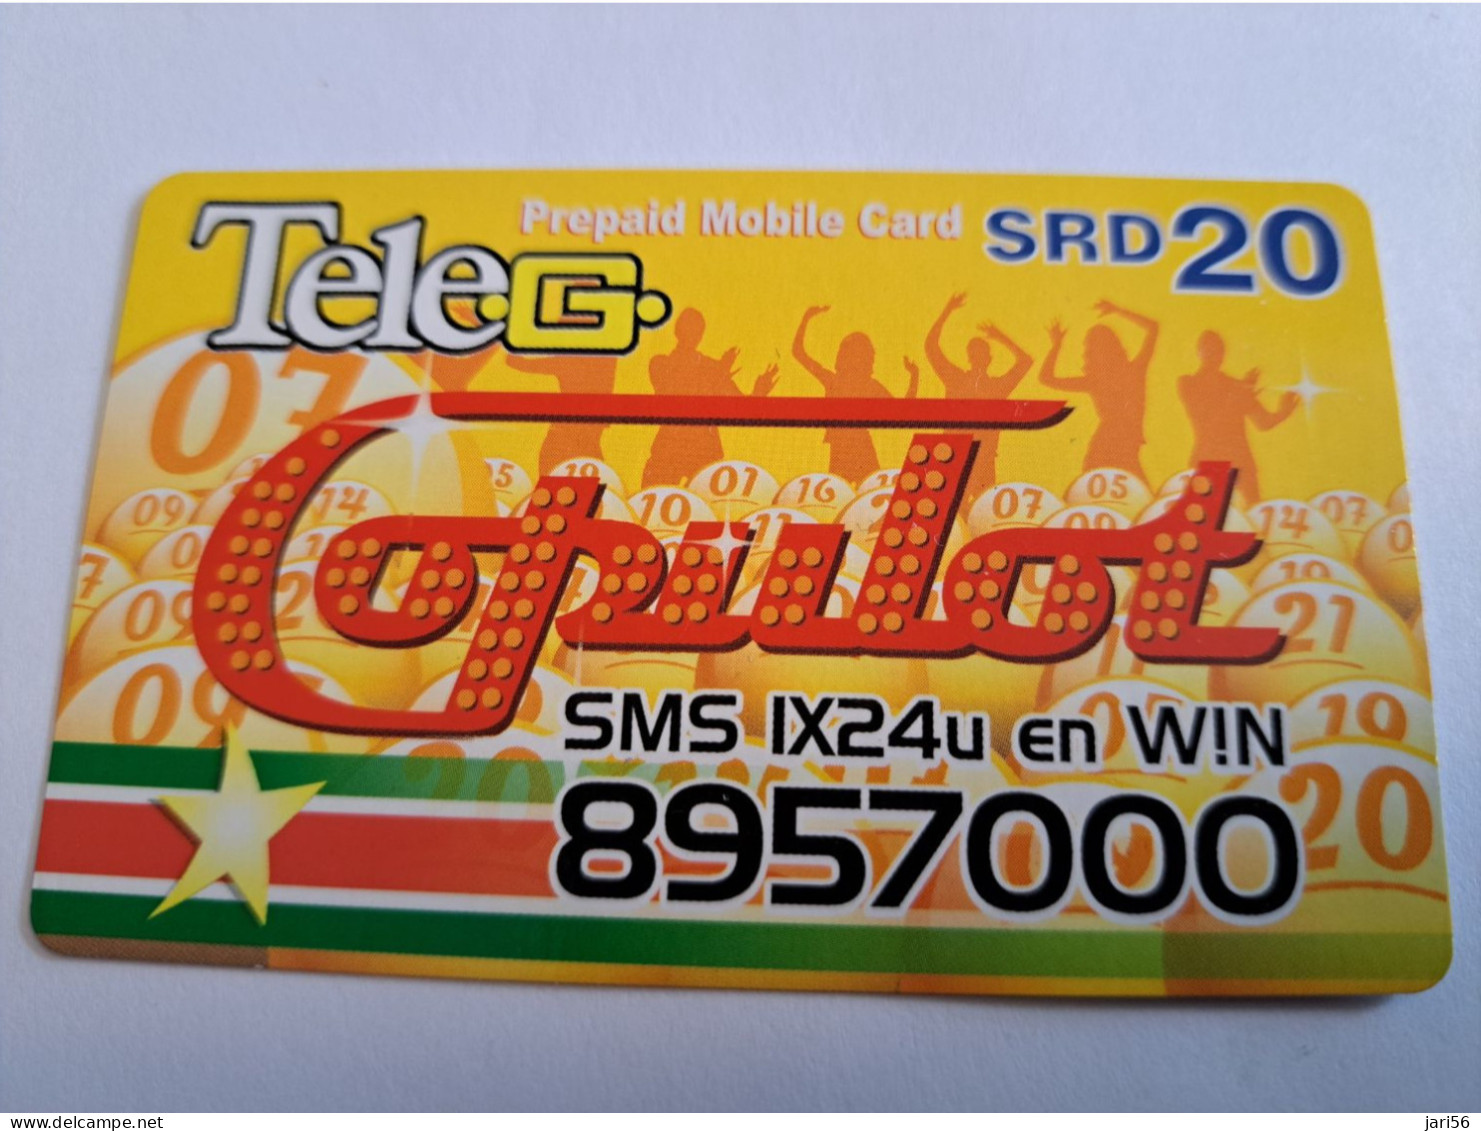 SURINAME US $ 20-    PREPAID CALLING CARD   /  COPULOT            **16424** - Surinam